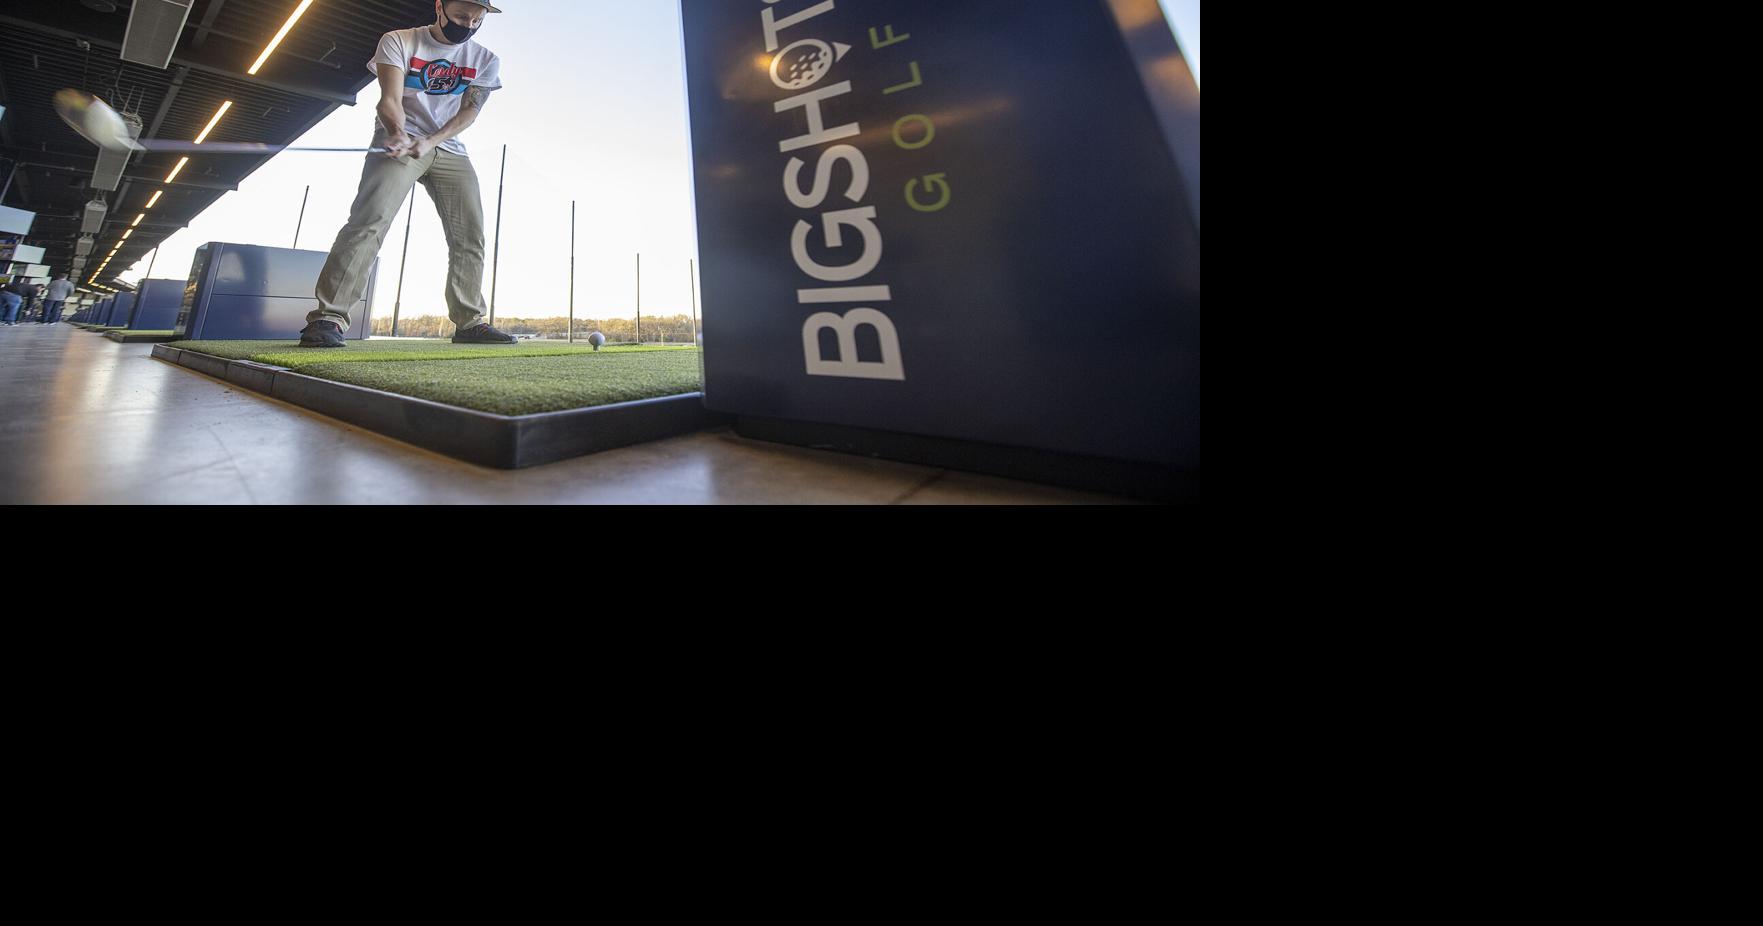 Come Play Games at BigShots Golf